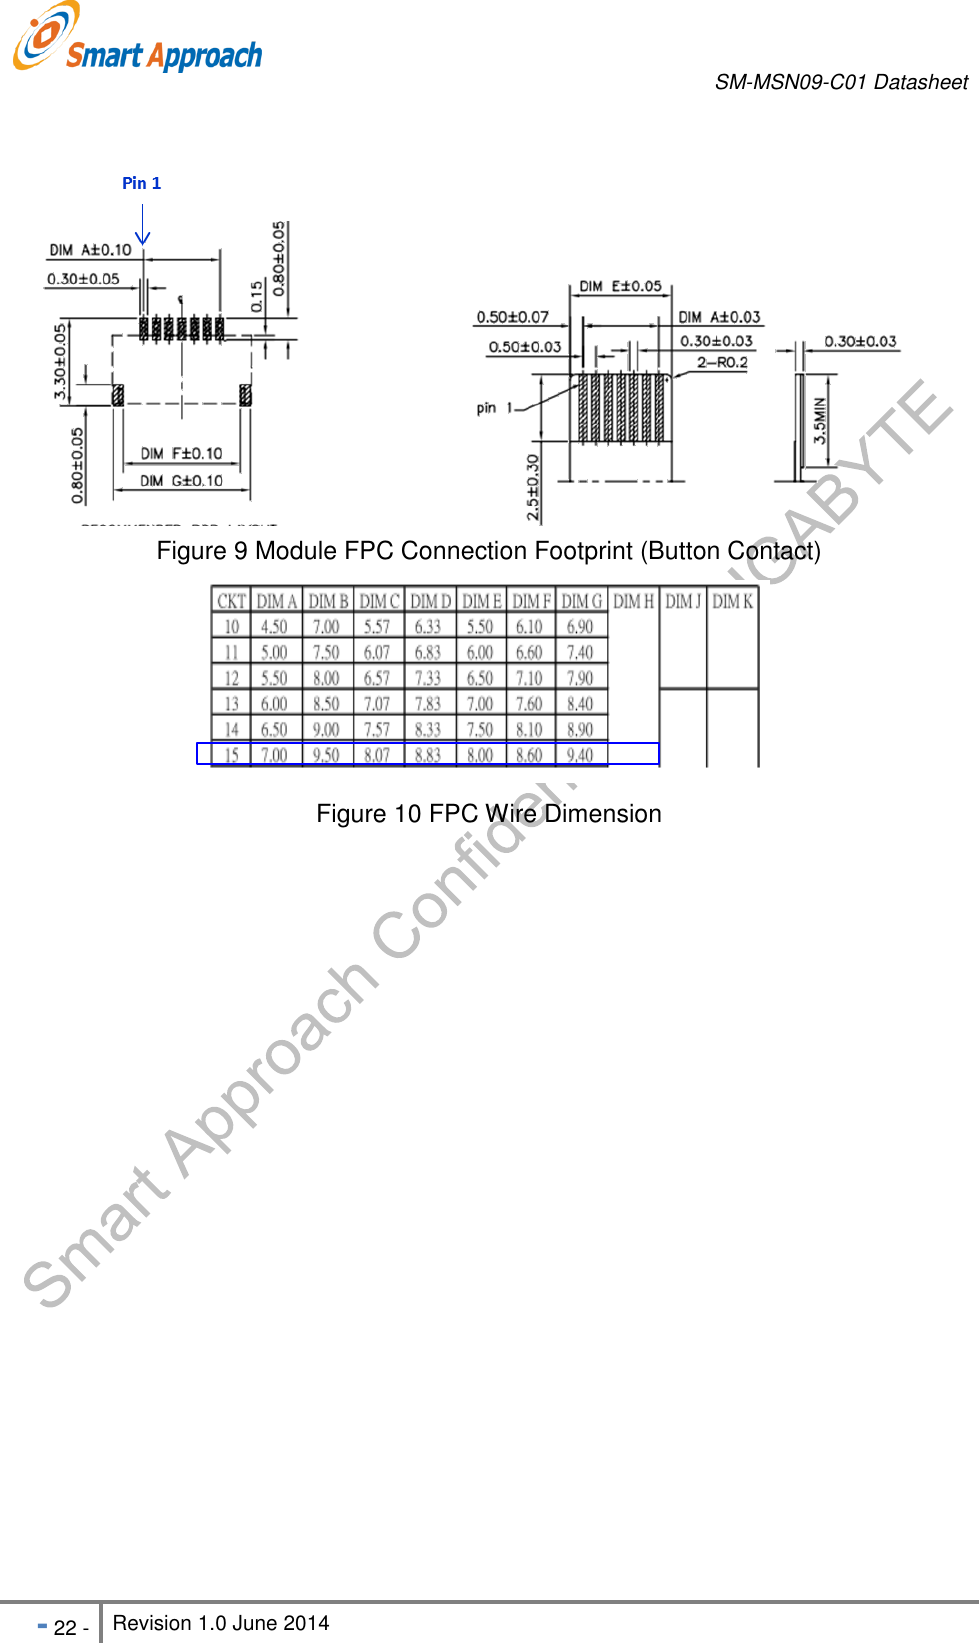       SM-MSN09-C01 Datasheet   - 22 - Revision 1.0 June 2014                                                              Figure 9 Module FPC Connection Footprint (Button Contact)  Figure 10 FPC Wire Dimension 